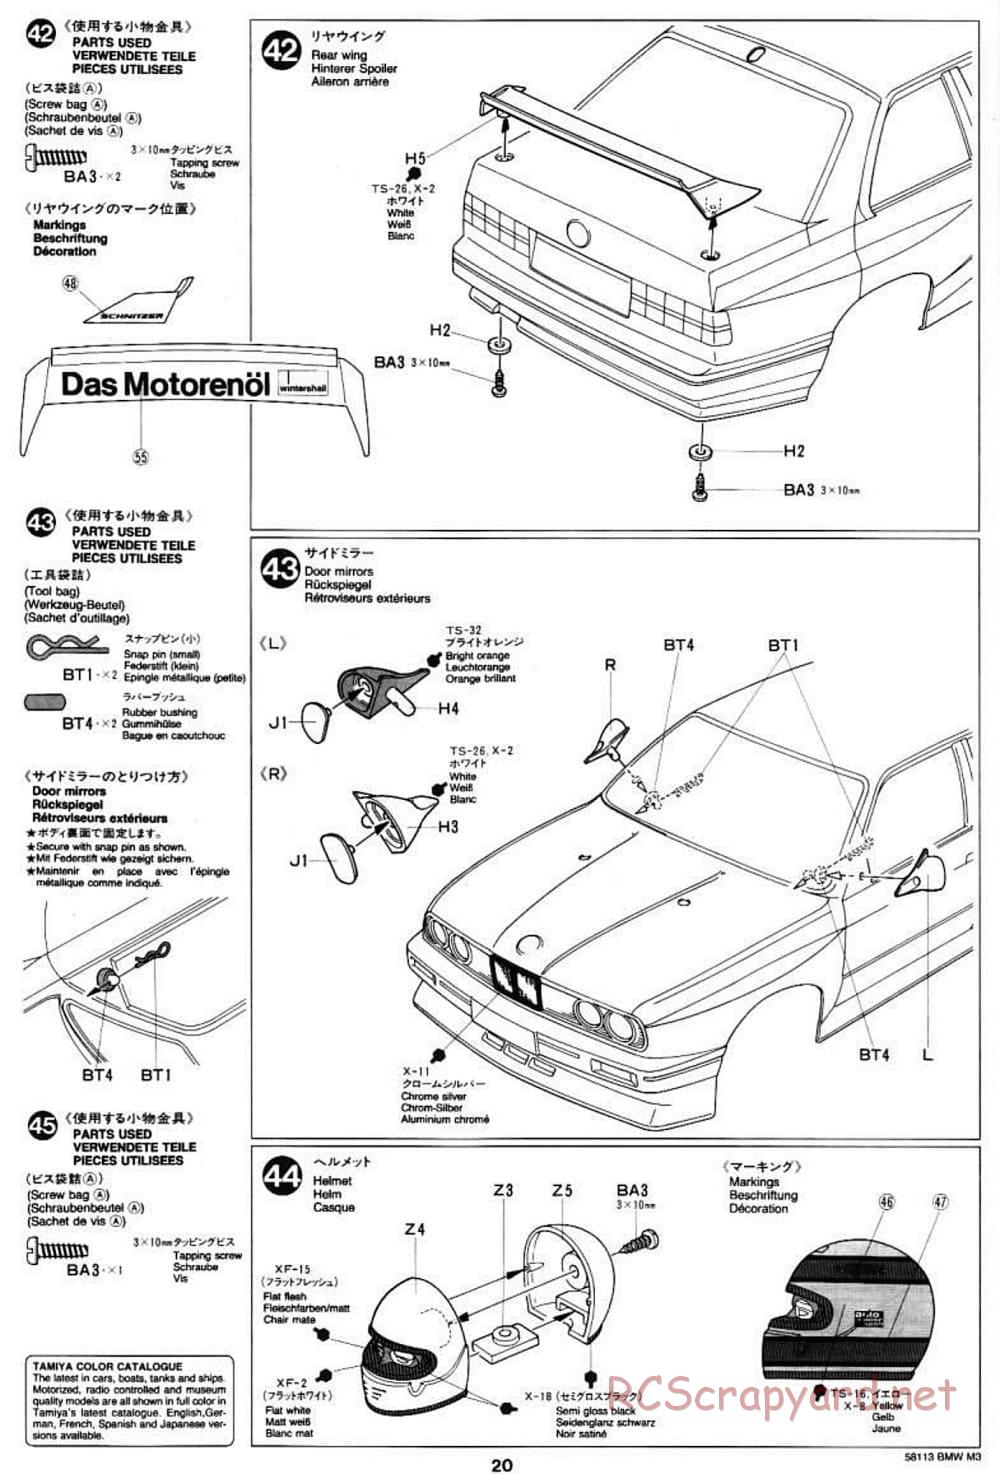 Tamiya - Schnitzer BMW M3 Sport Evo - TA-01 Chassis - Manual - Page 20